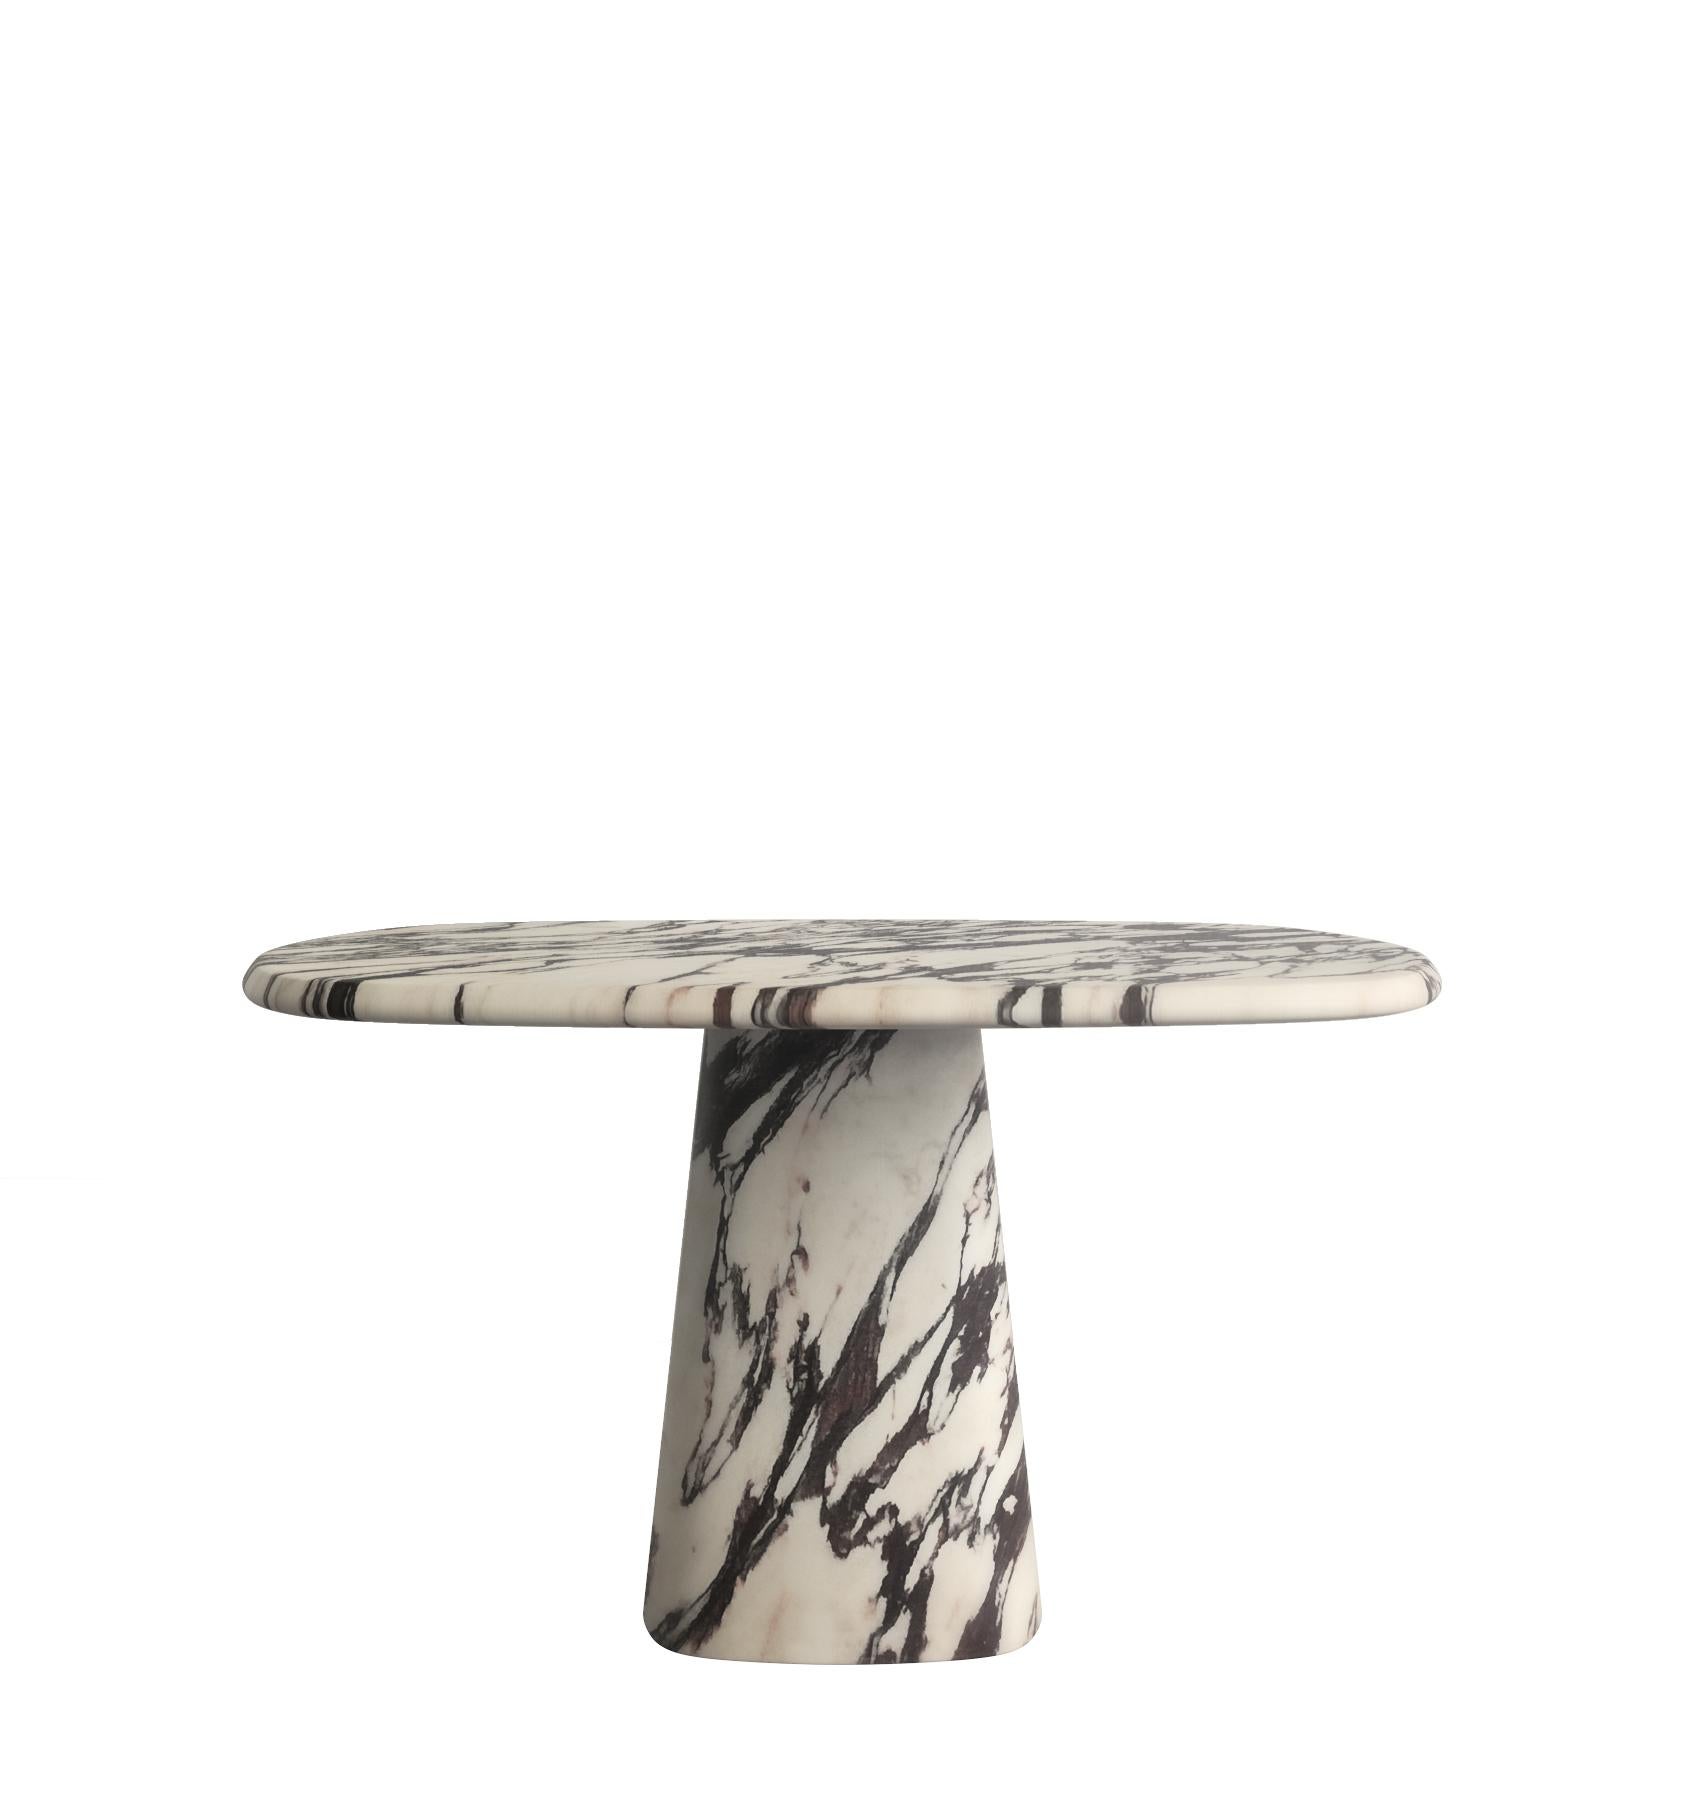 Contemporary Kilknos Wedge Table by Marmi Serafini For Sale